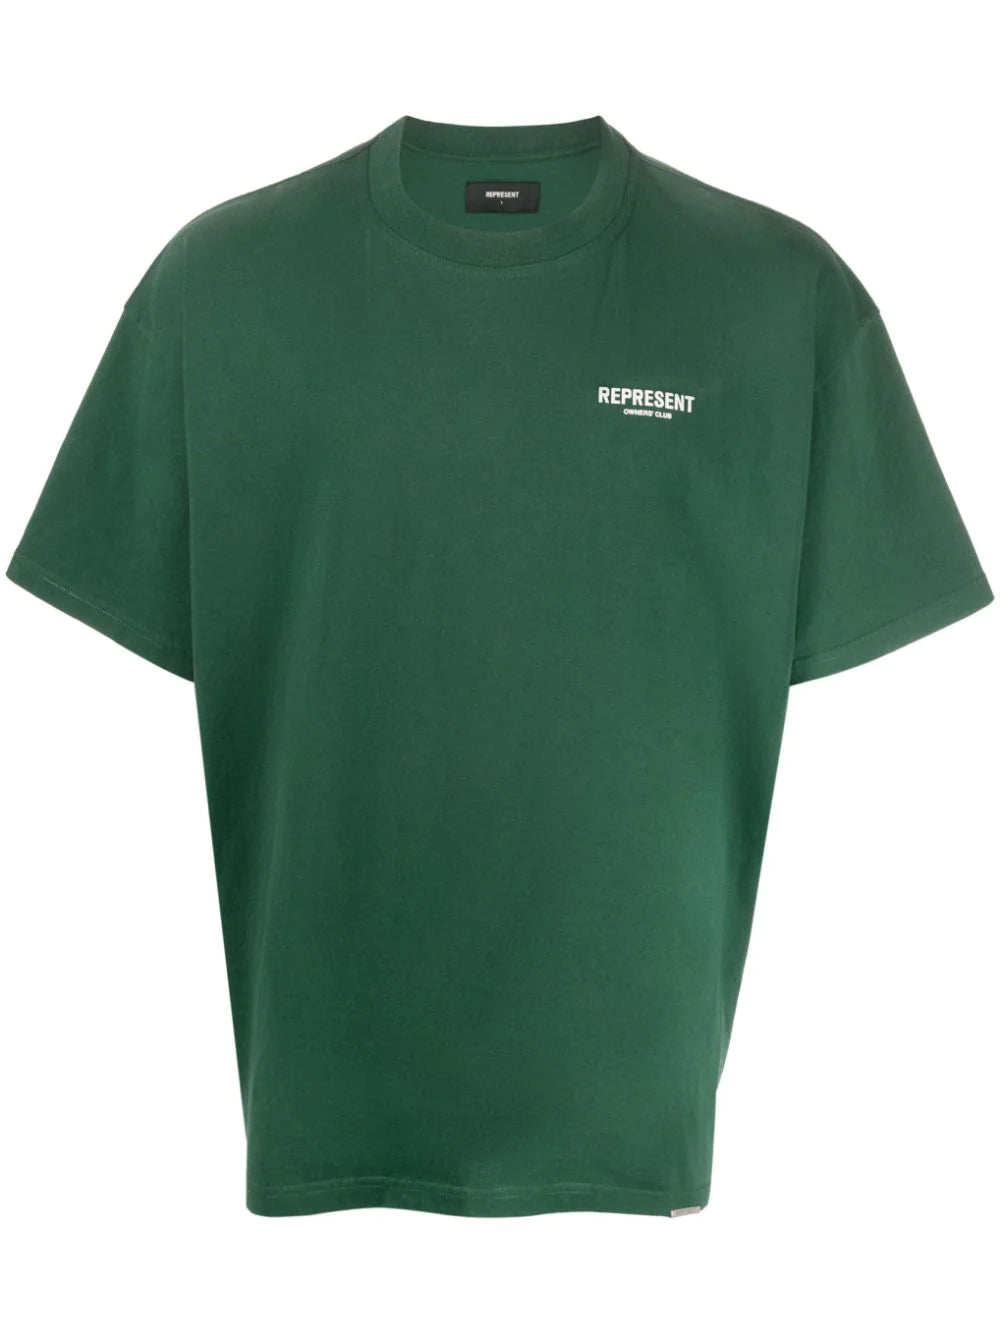 REPRESENT Owners Club T-Shirt Racing Green - MAISONDEFASHION.COM